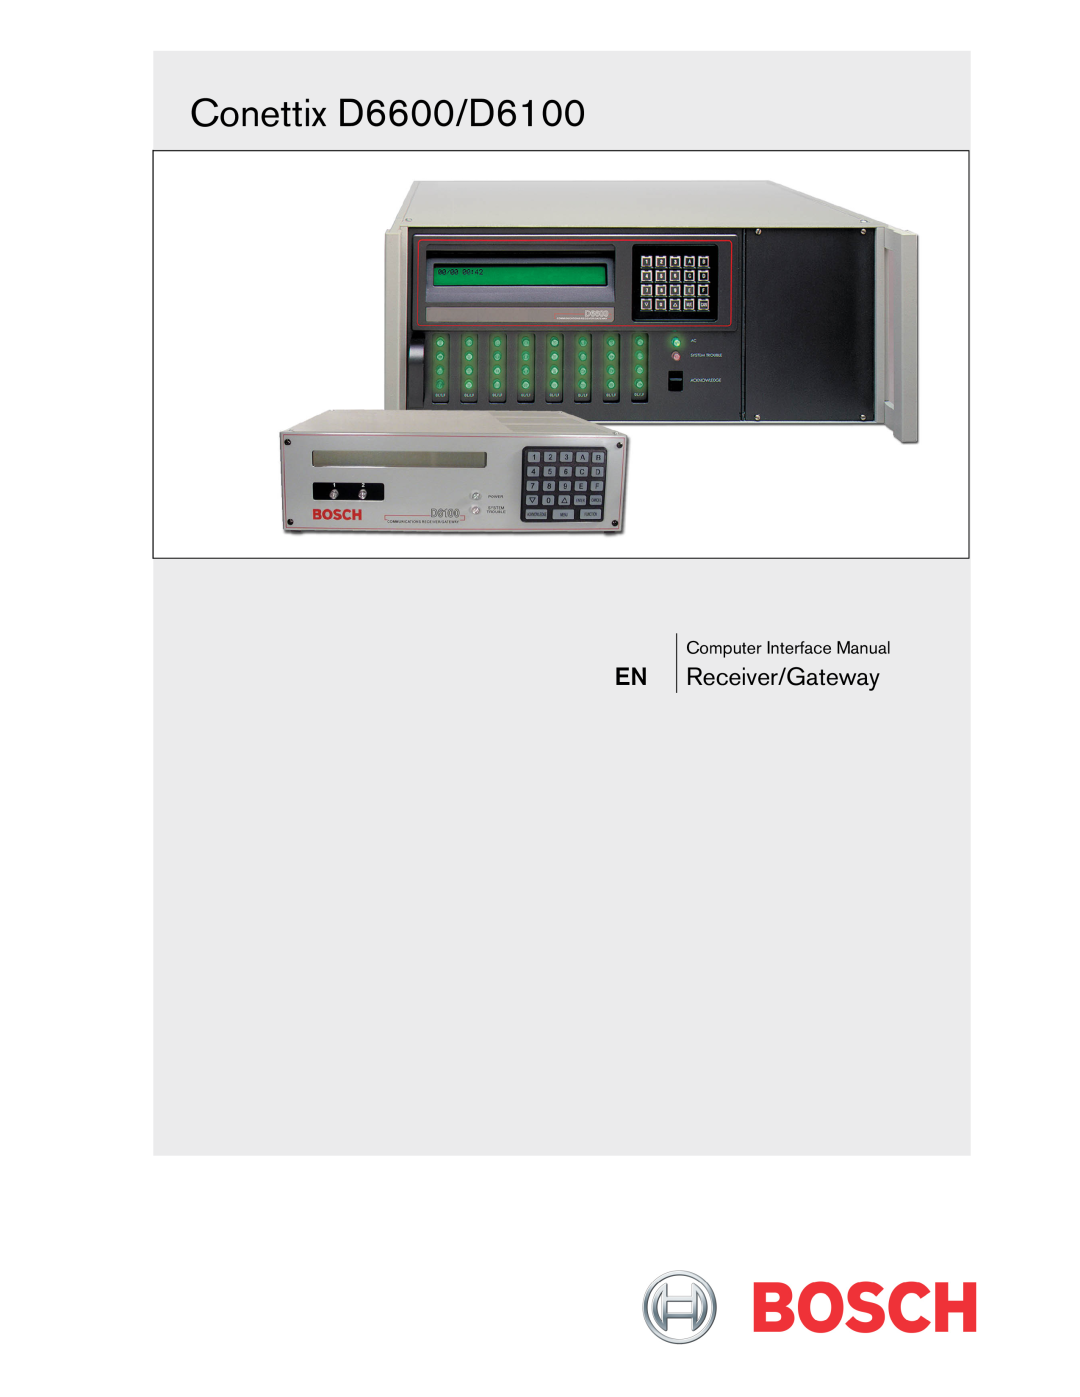 Bosch Appliances manual Card Installation Guide, Conettix D6600, Communications Receiver/Gateway, 00/00 